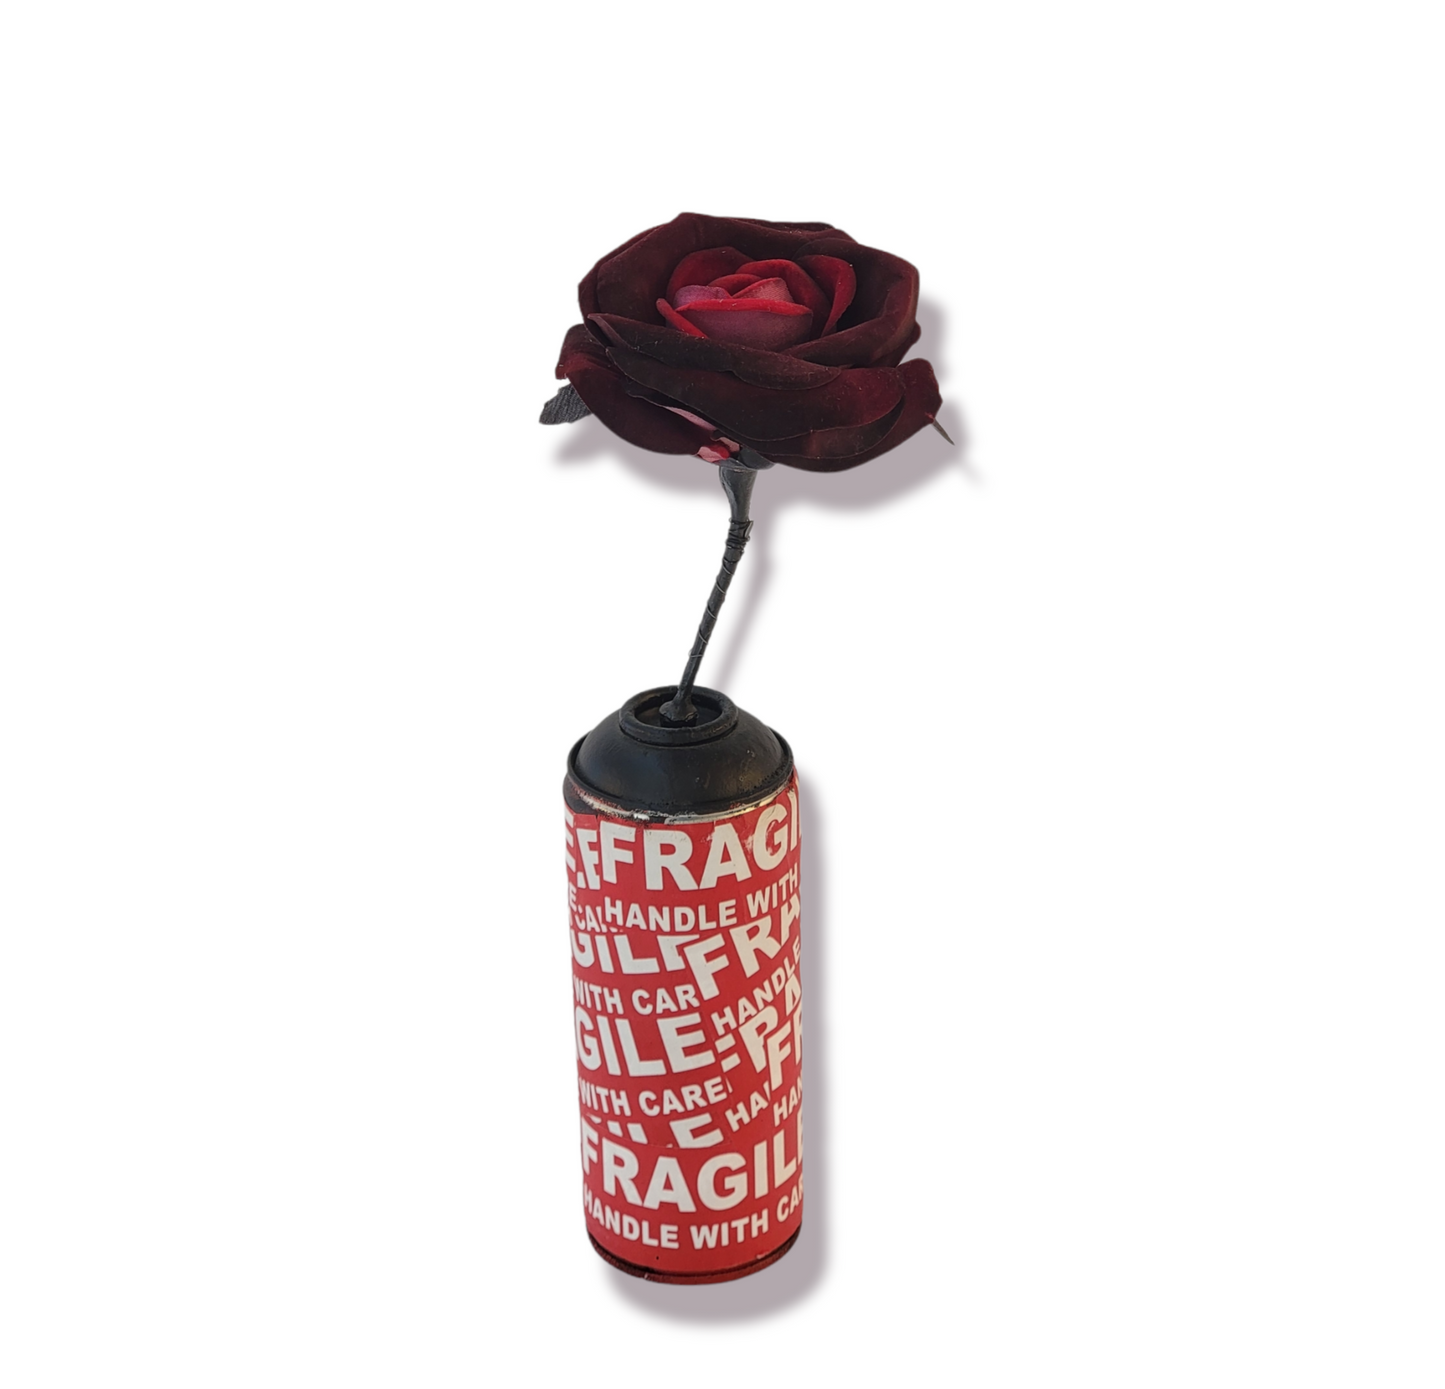 Fragile - Spray Can w/ Rose 2018